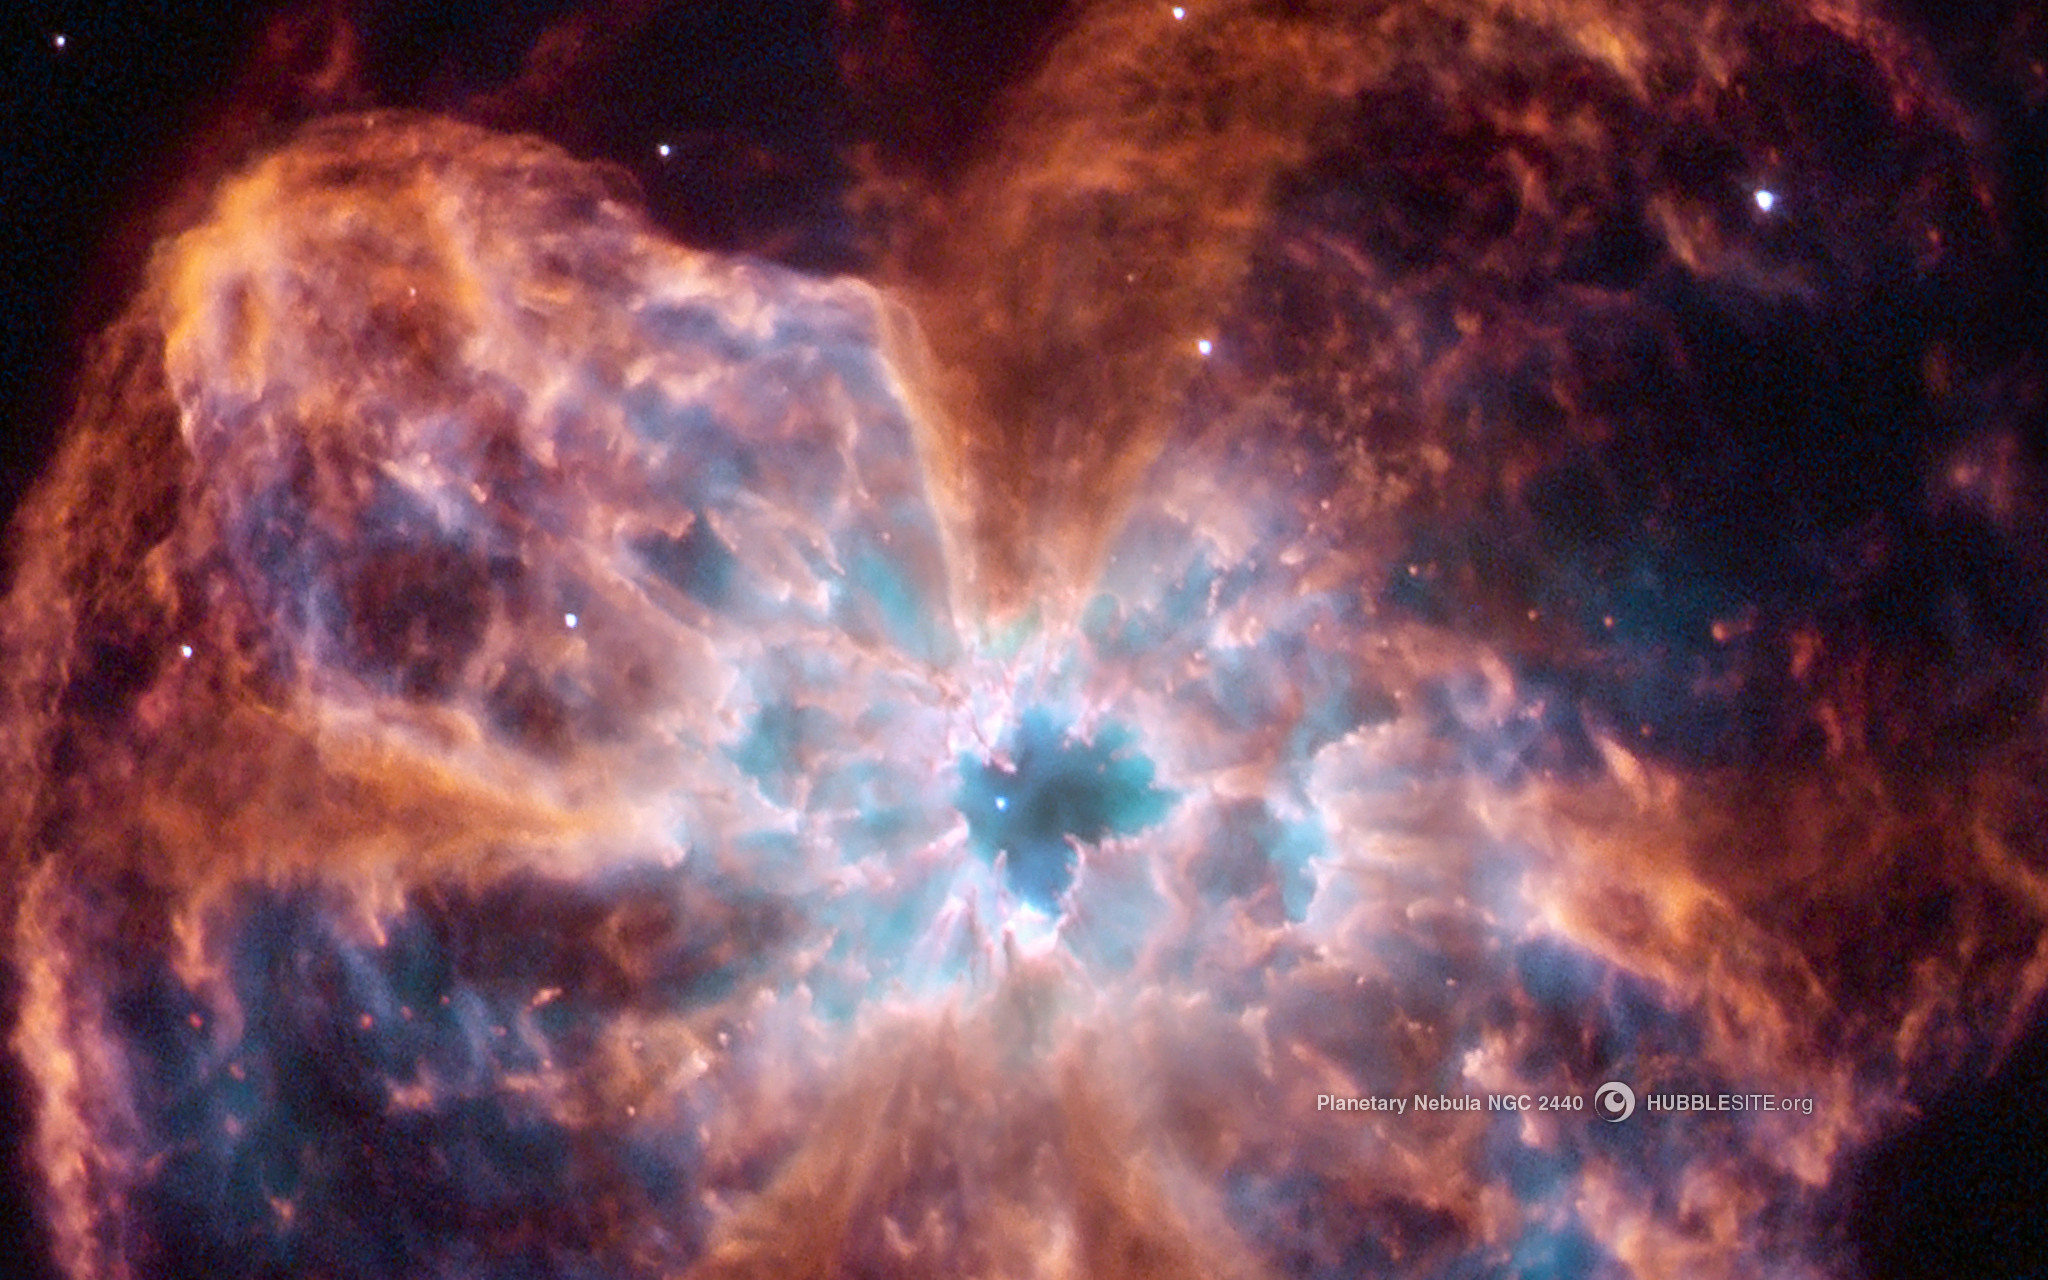 Planetary Nebula NGC 2400